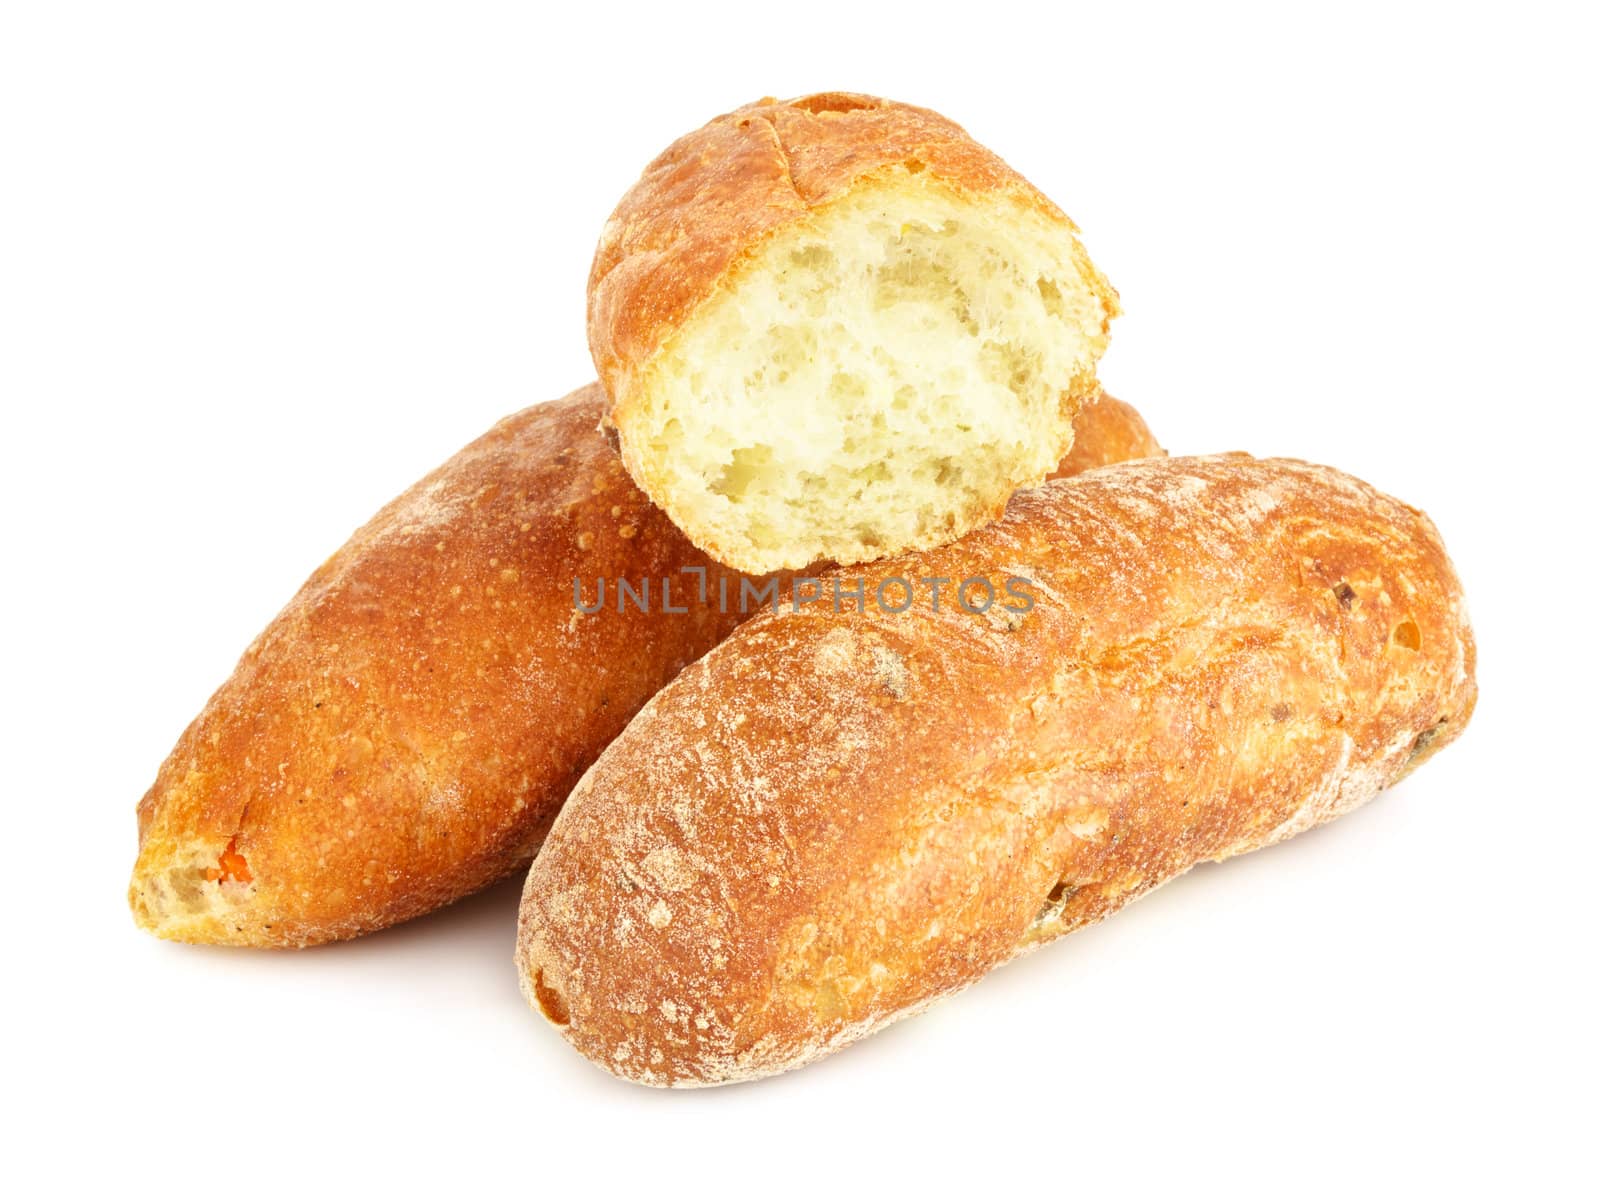 some ciabatta (italian bread), isolated on white background